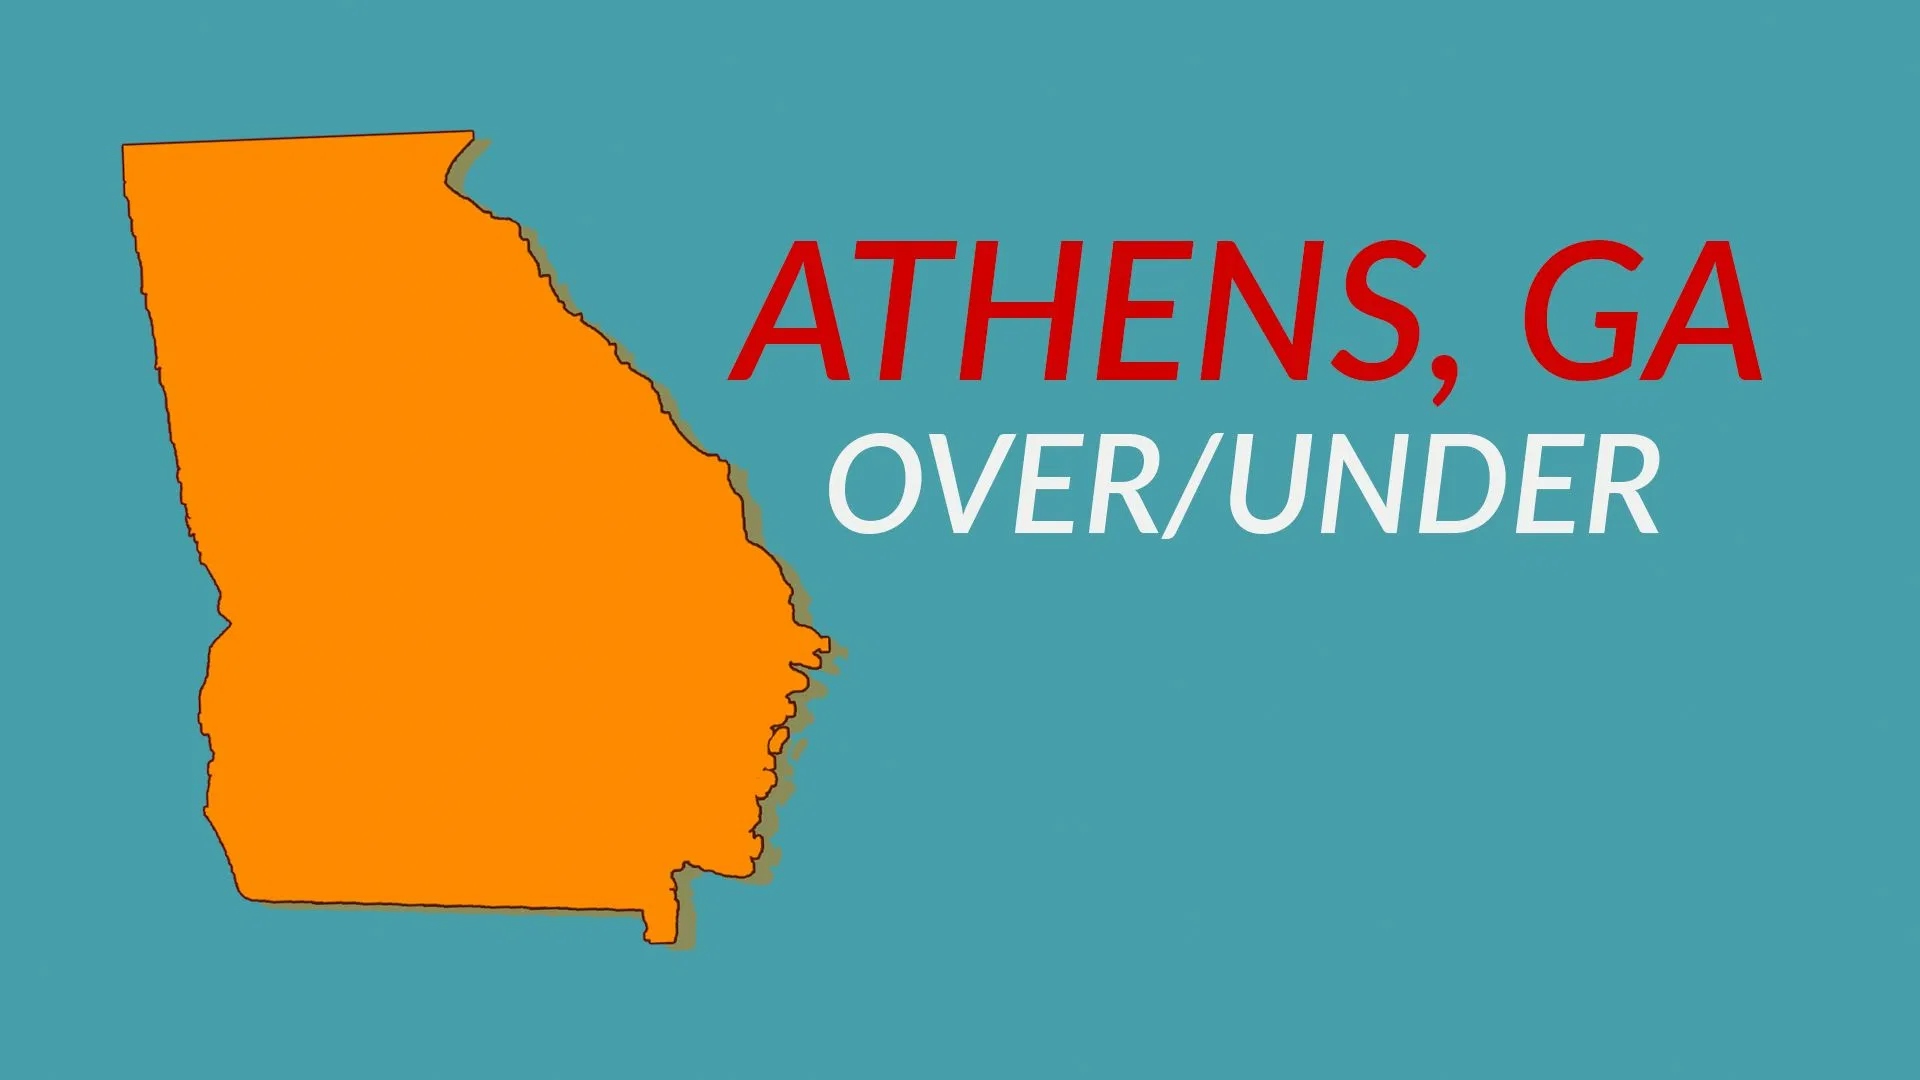 Athens, Georgia: Over/Under